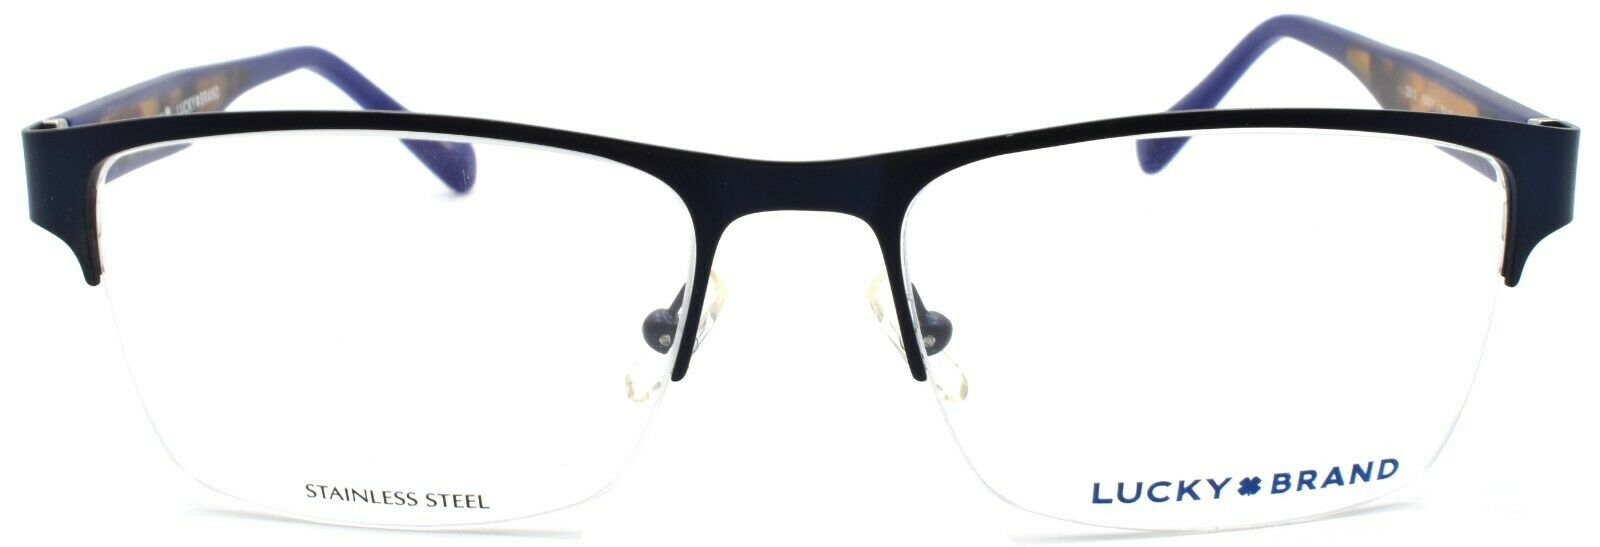 2-LUCKY BRAND D513 Men's Eyeglasses Frames Half-rim 53-17-140 Navy-751286343625-IKSpecs